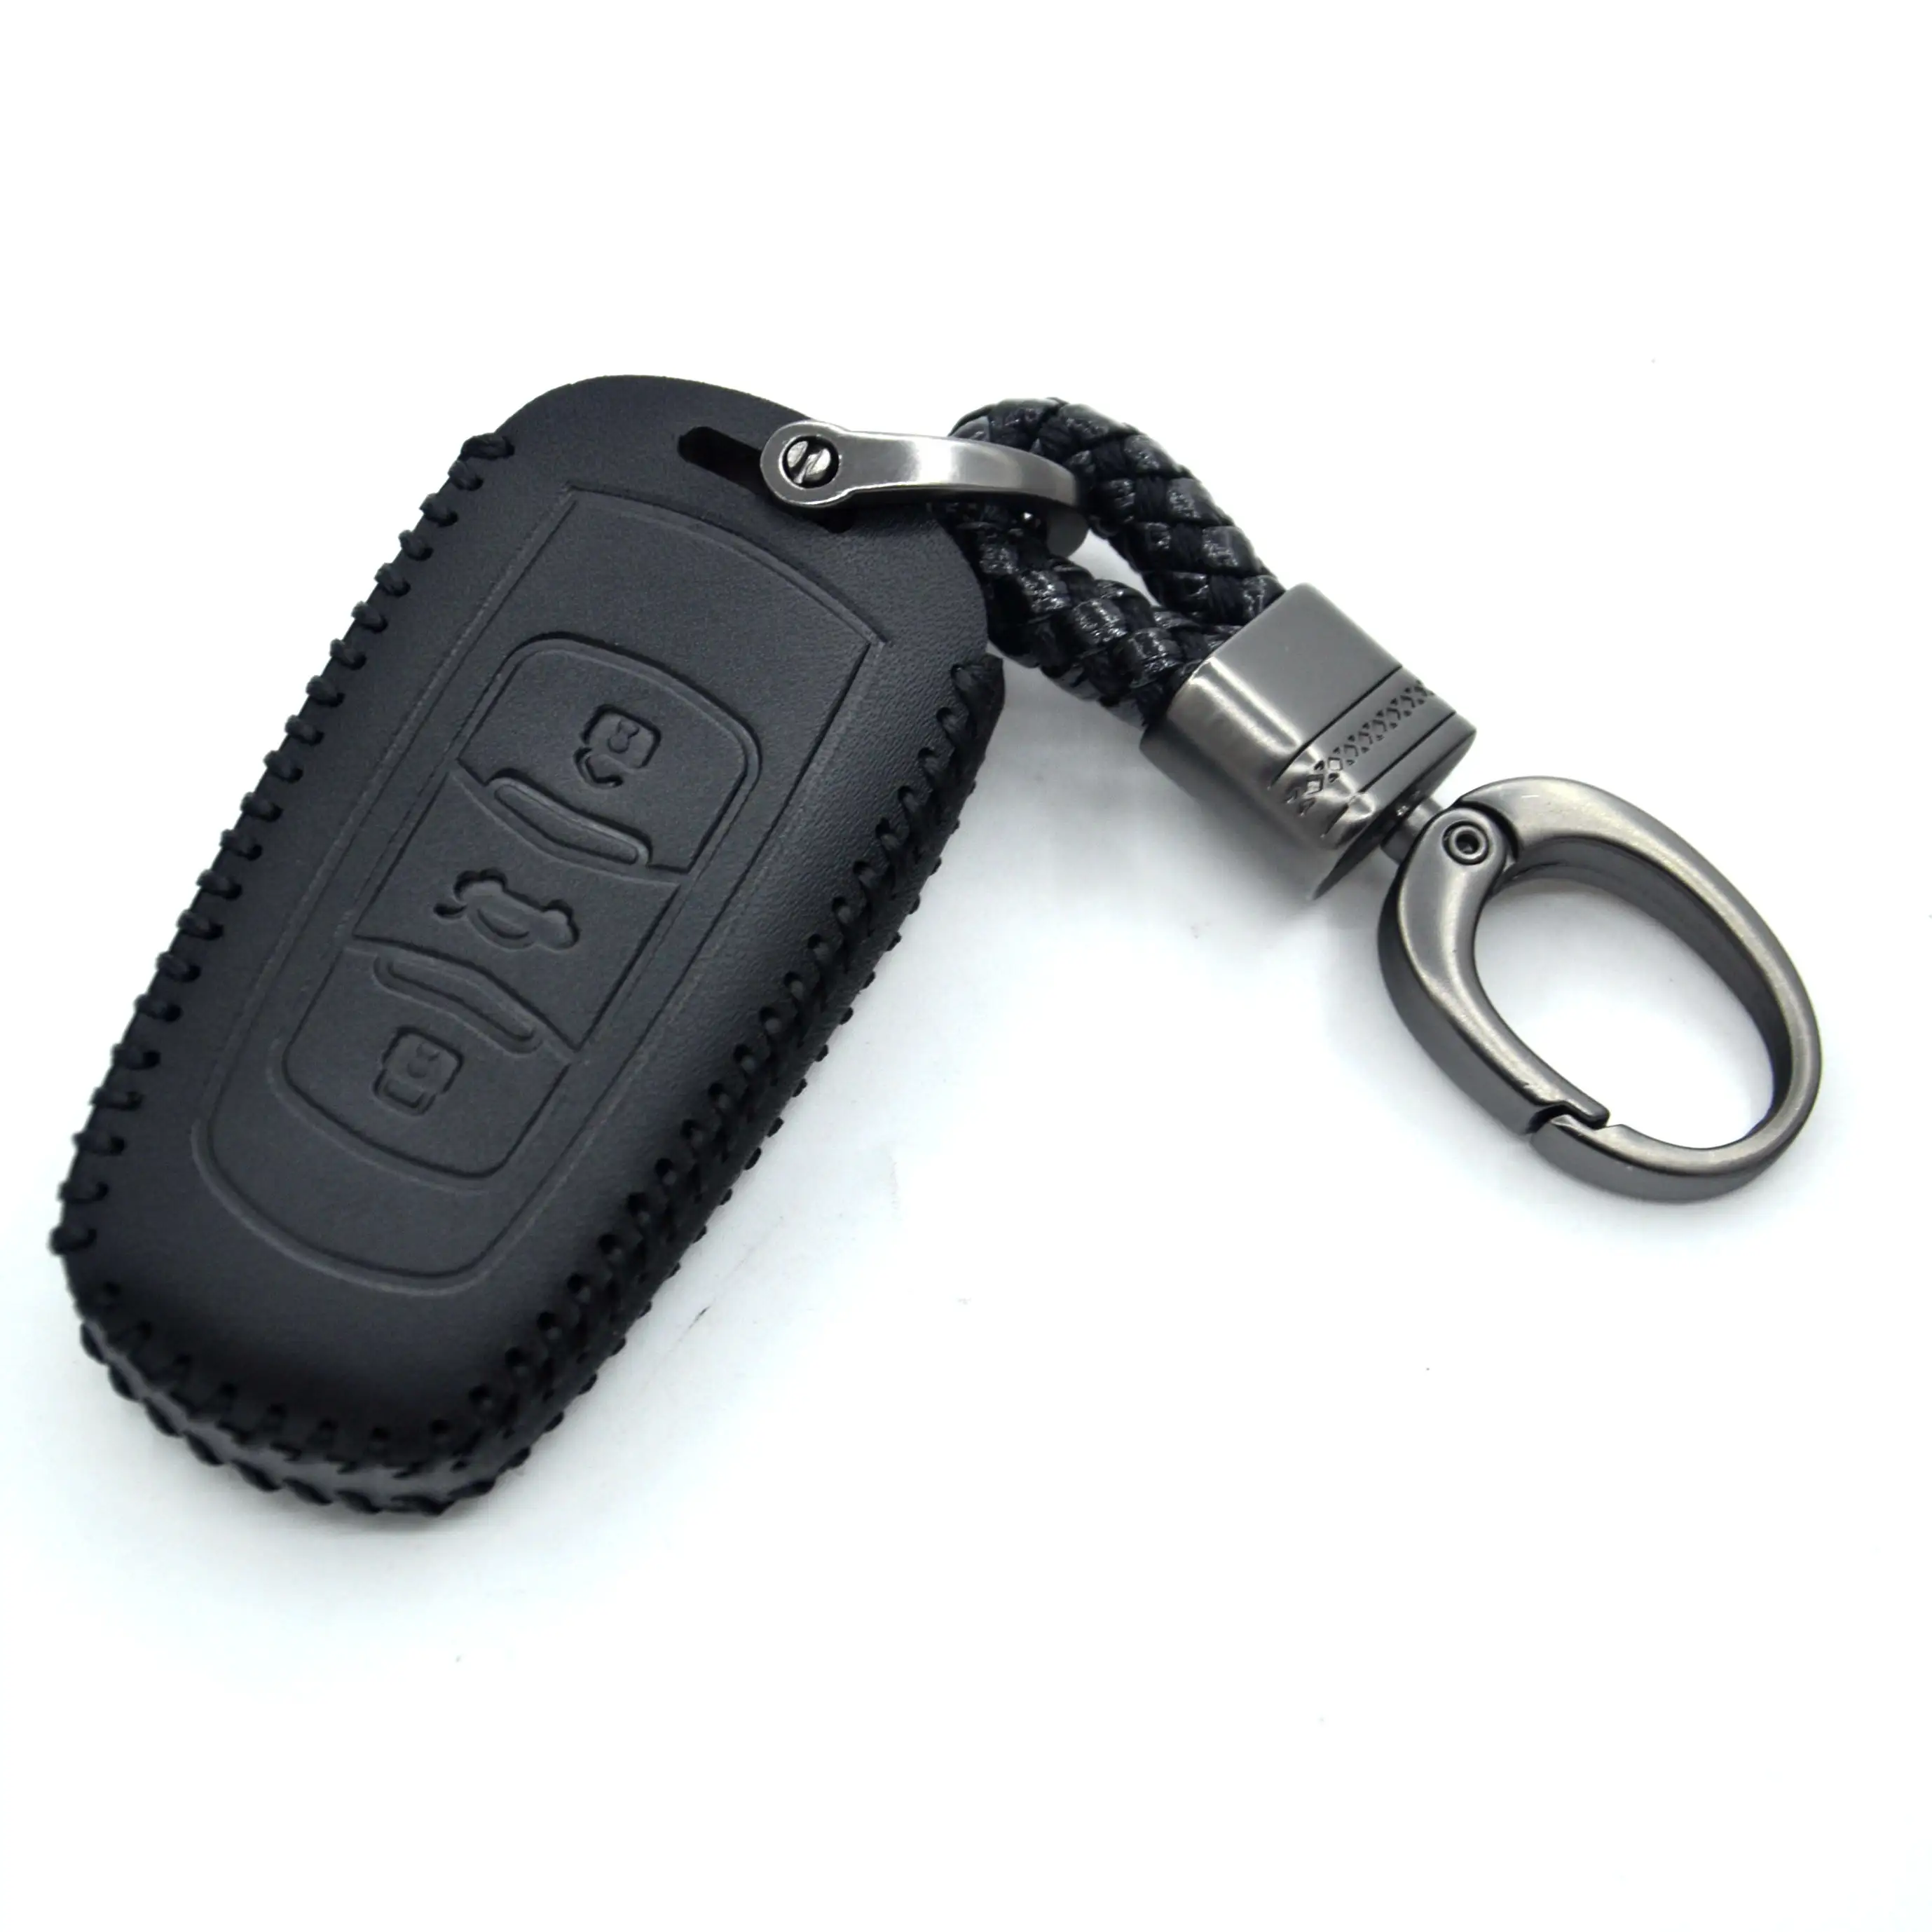 Wholesale Genuine Leather Car Automobile Car Key Case Cover Bag For Vision